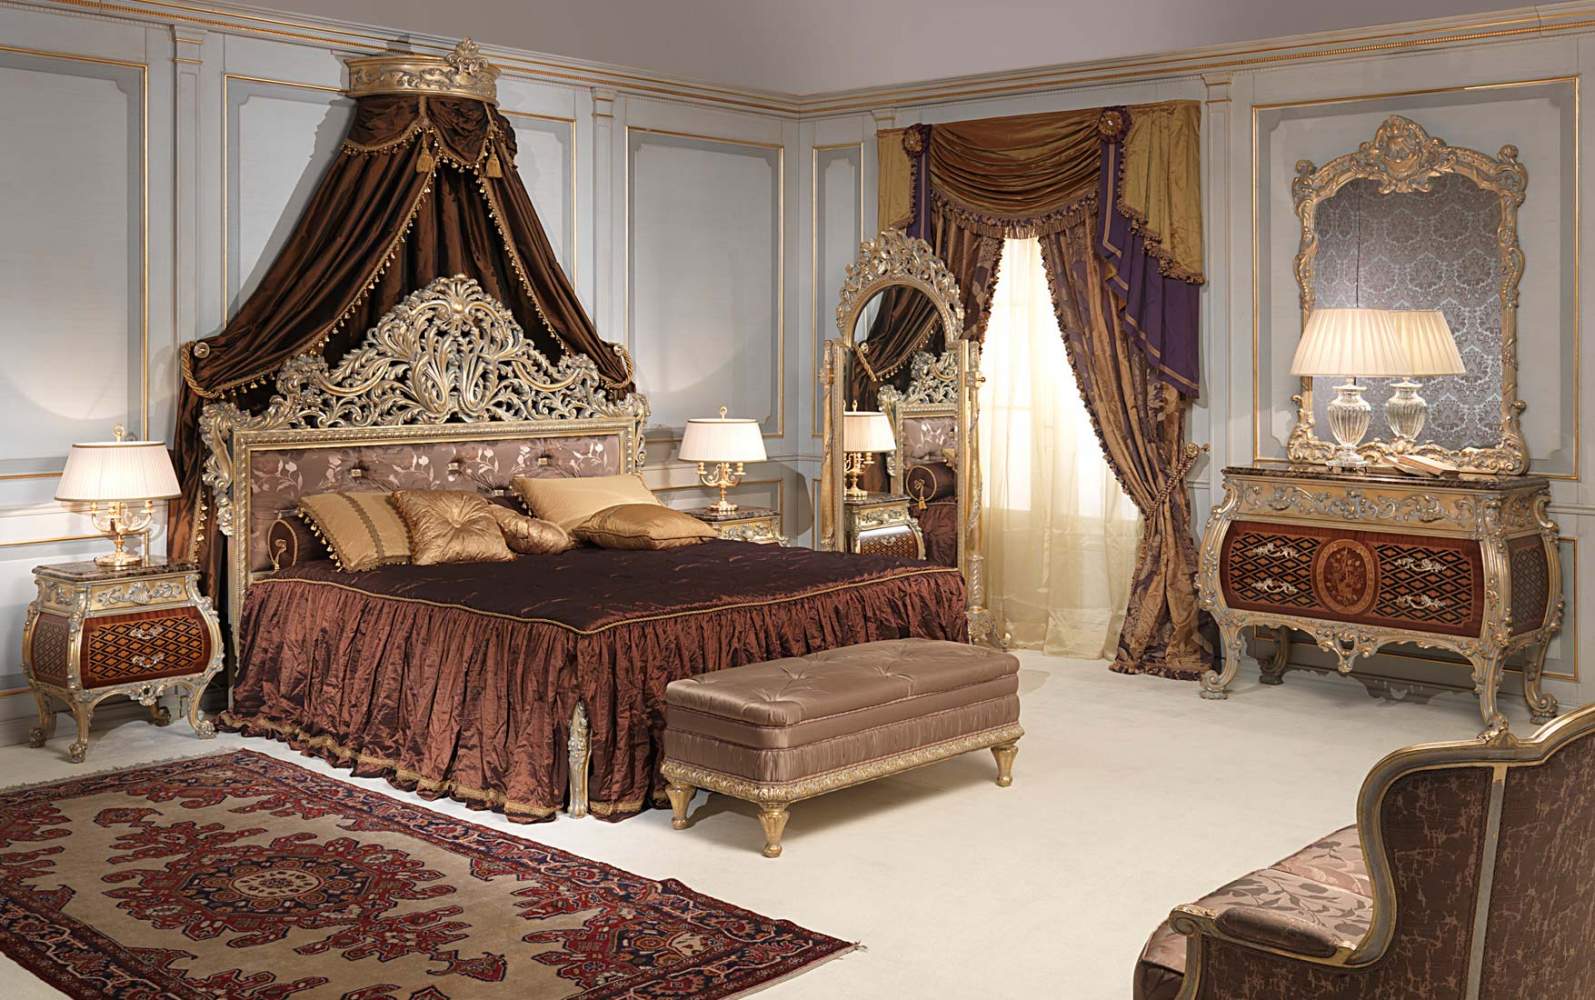 Classic Emperador Gold bedroom in Louis XV style